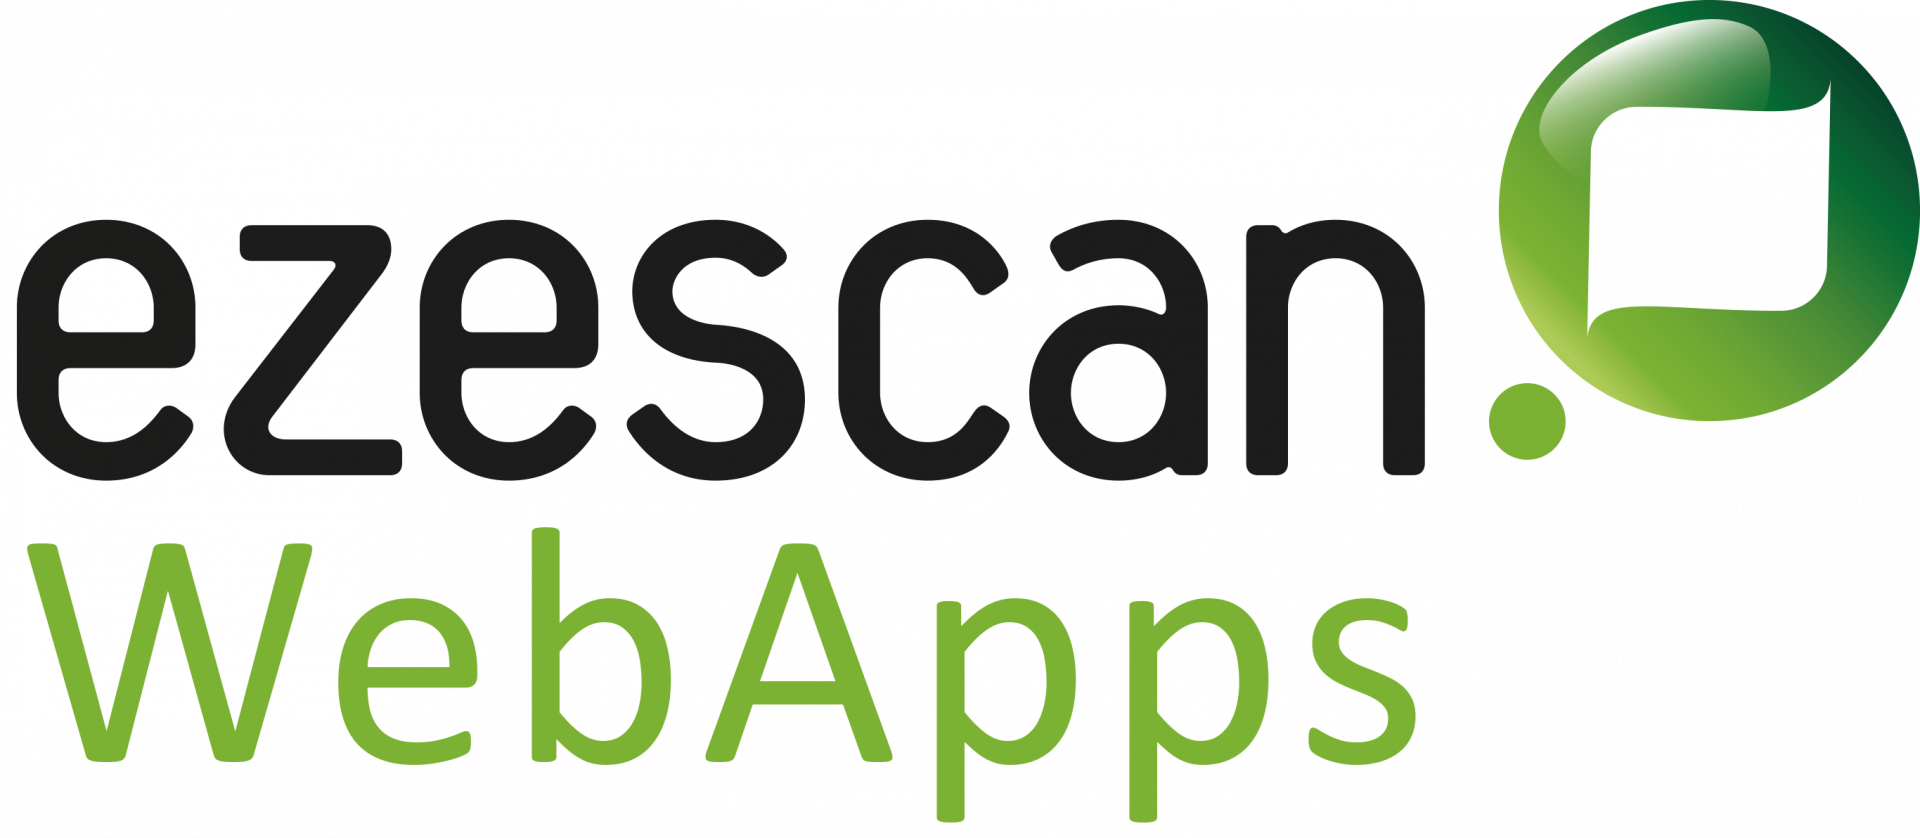 EzeScan WebApps Logo